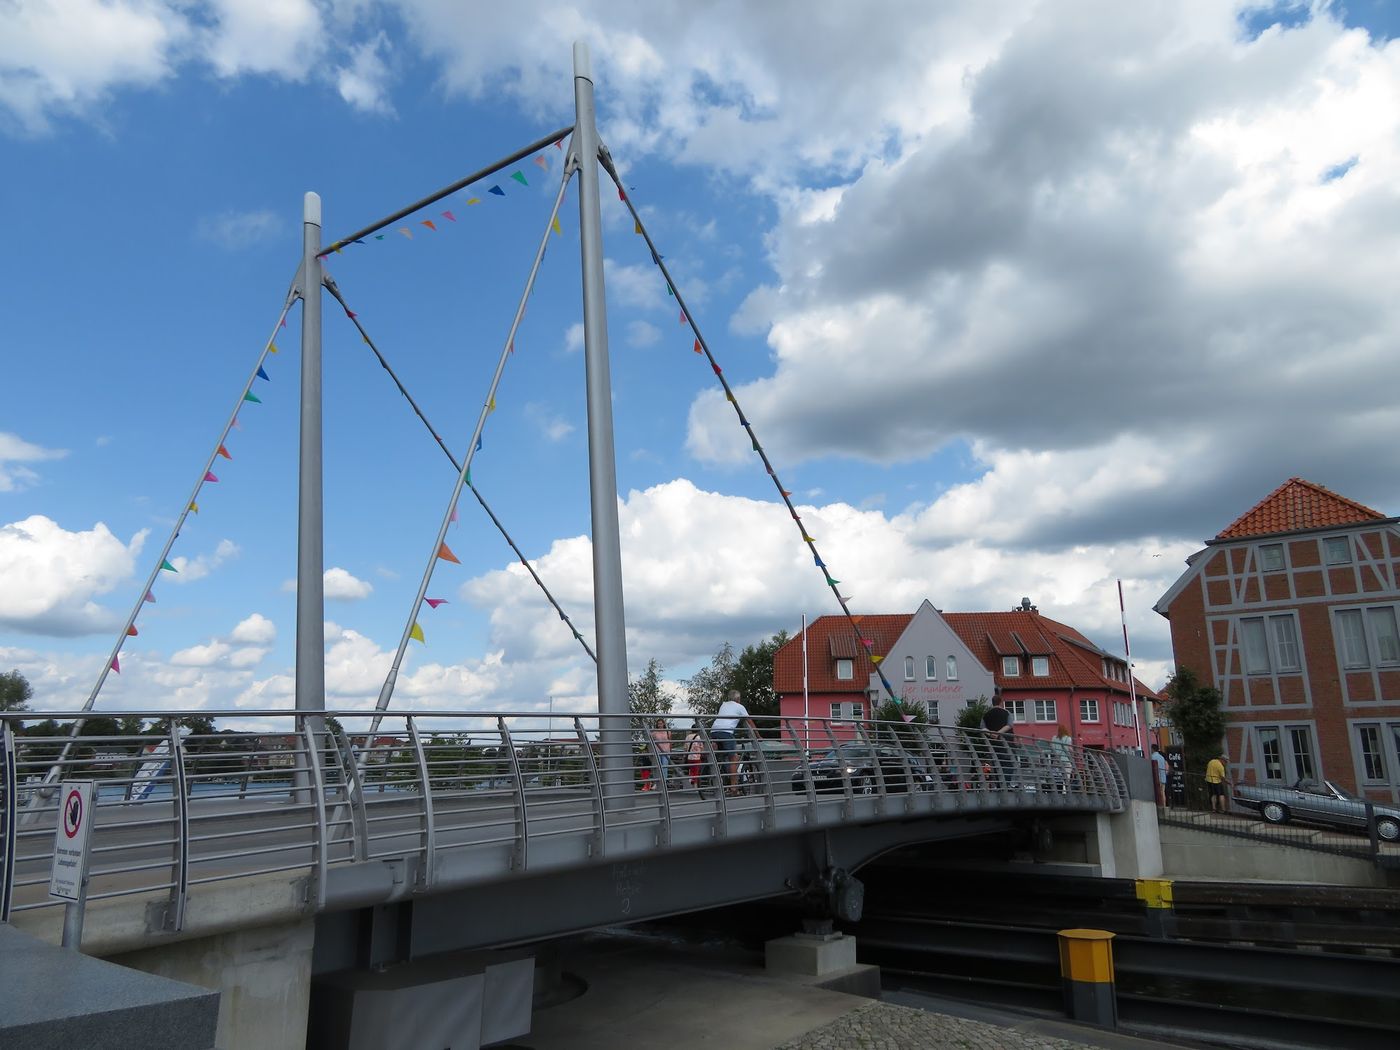 Faszinierendes Bauwerk: Die Drehbrücke Malchow